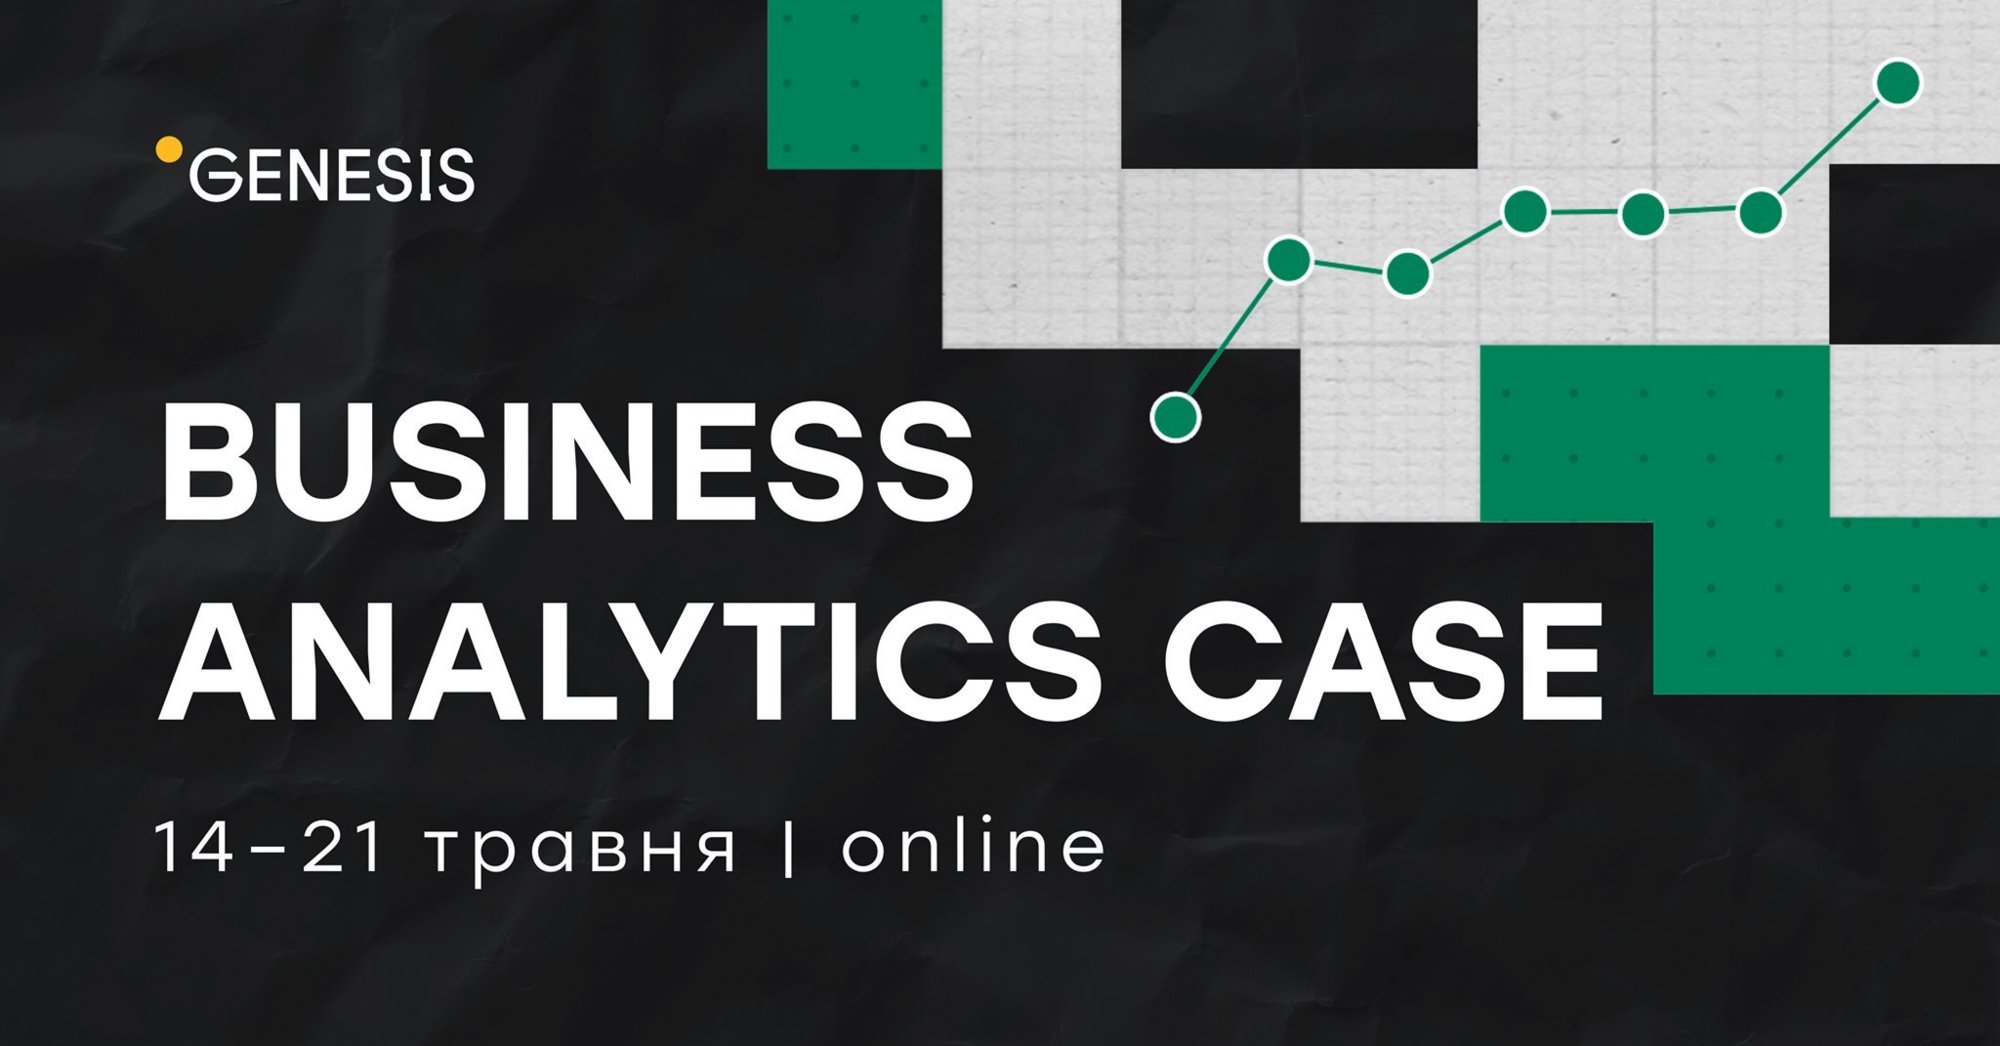 Genesis Business Analytics Case